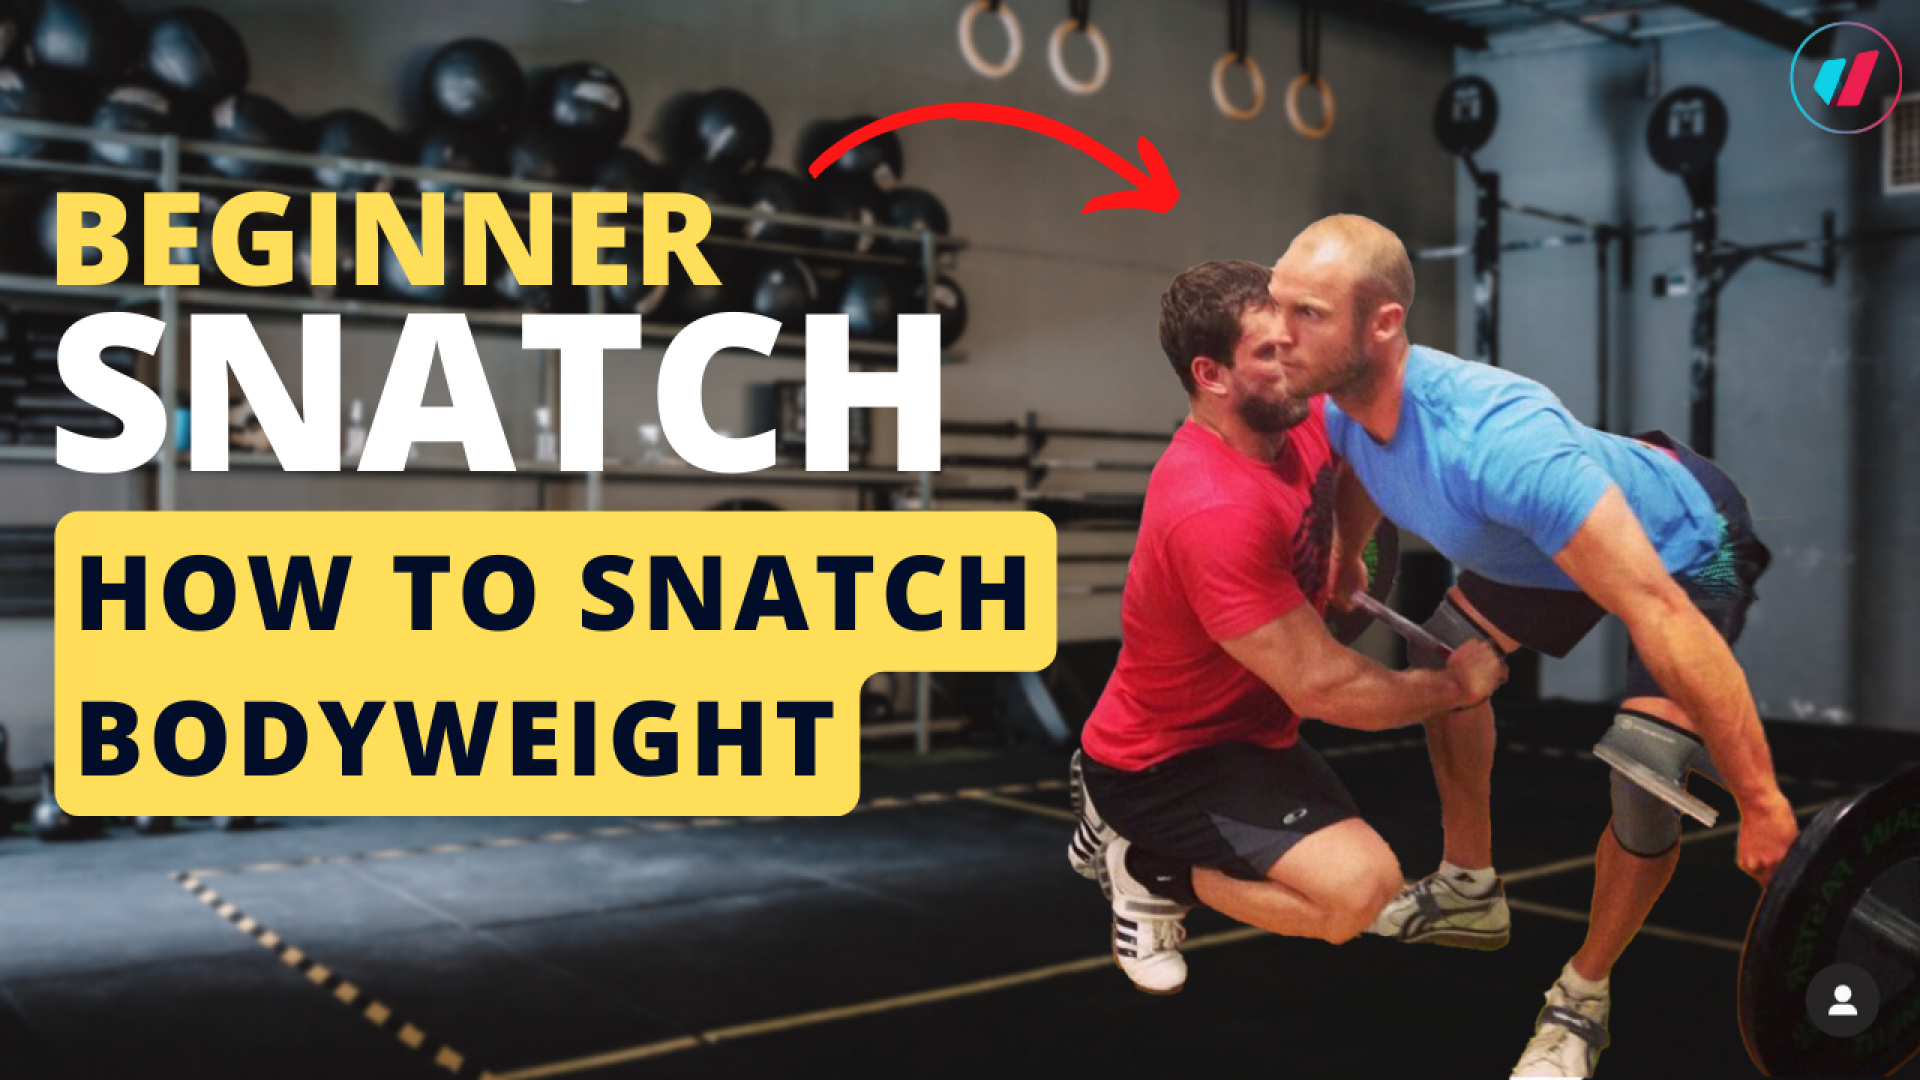 Beginner Snatch - How to snatch bodyweight